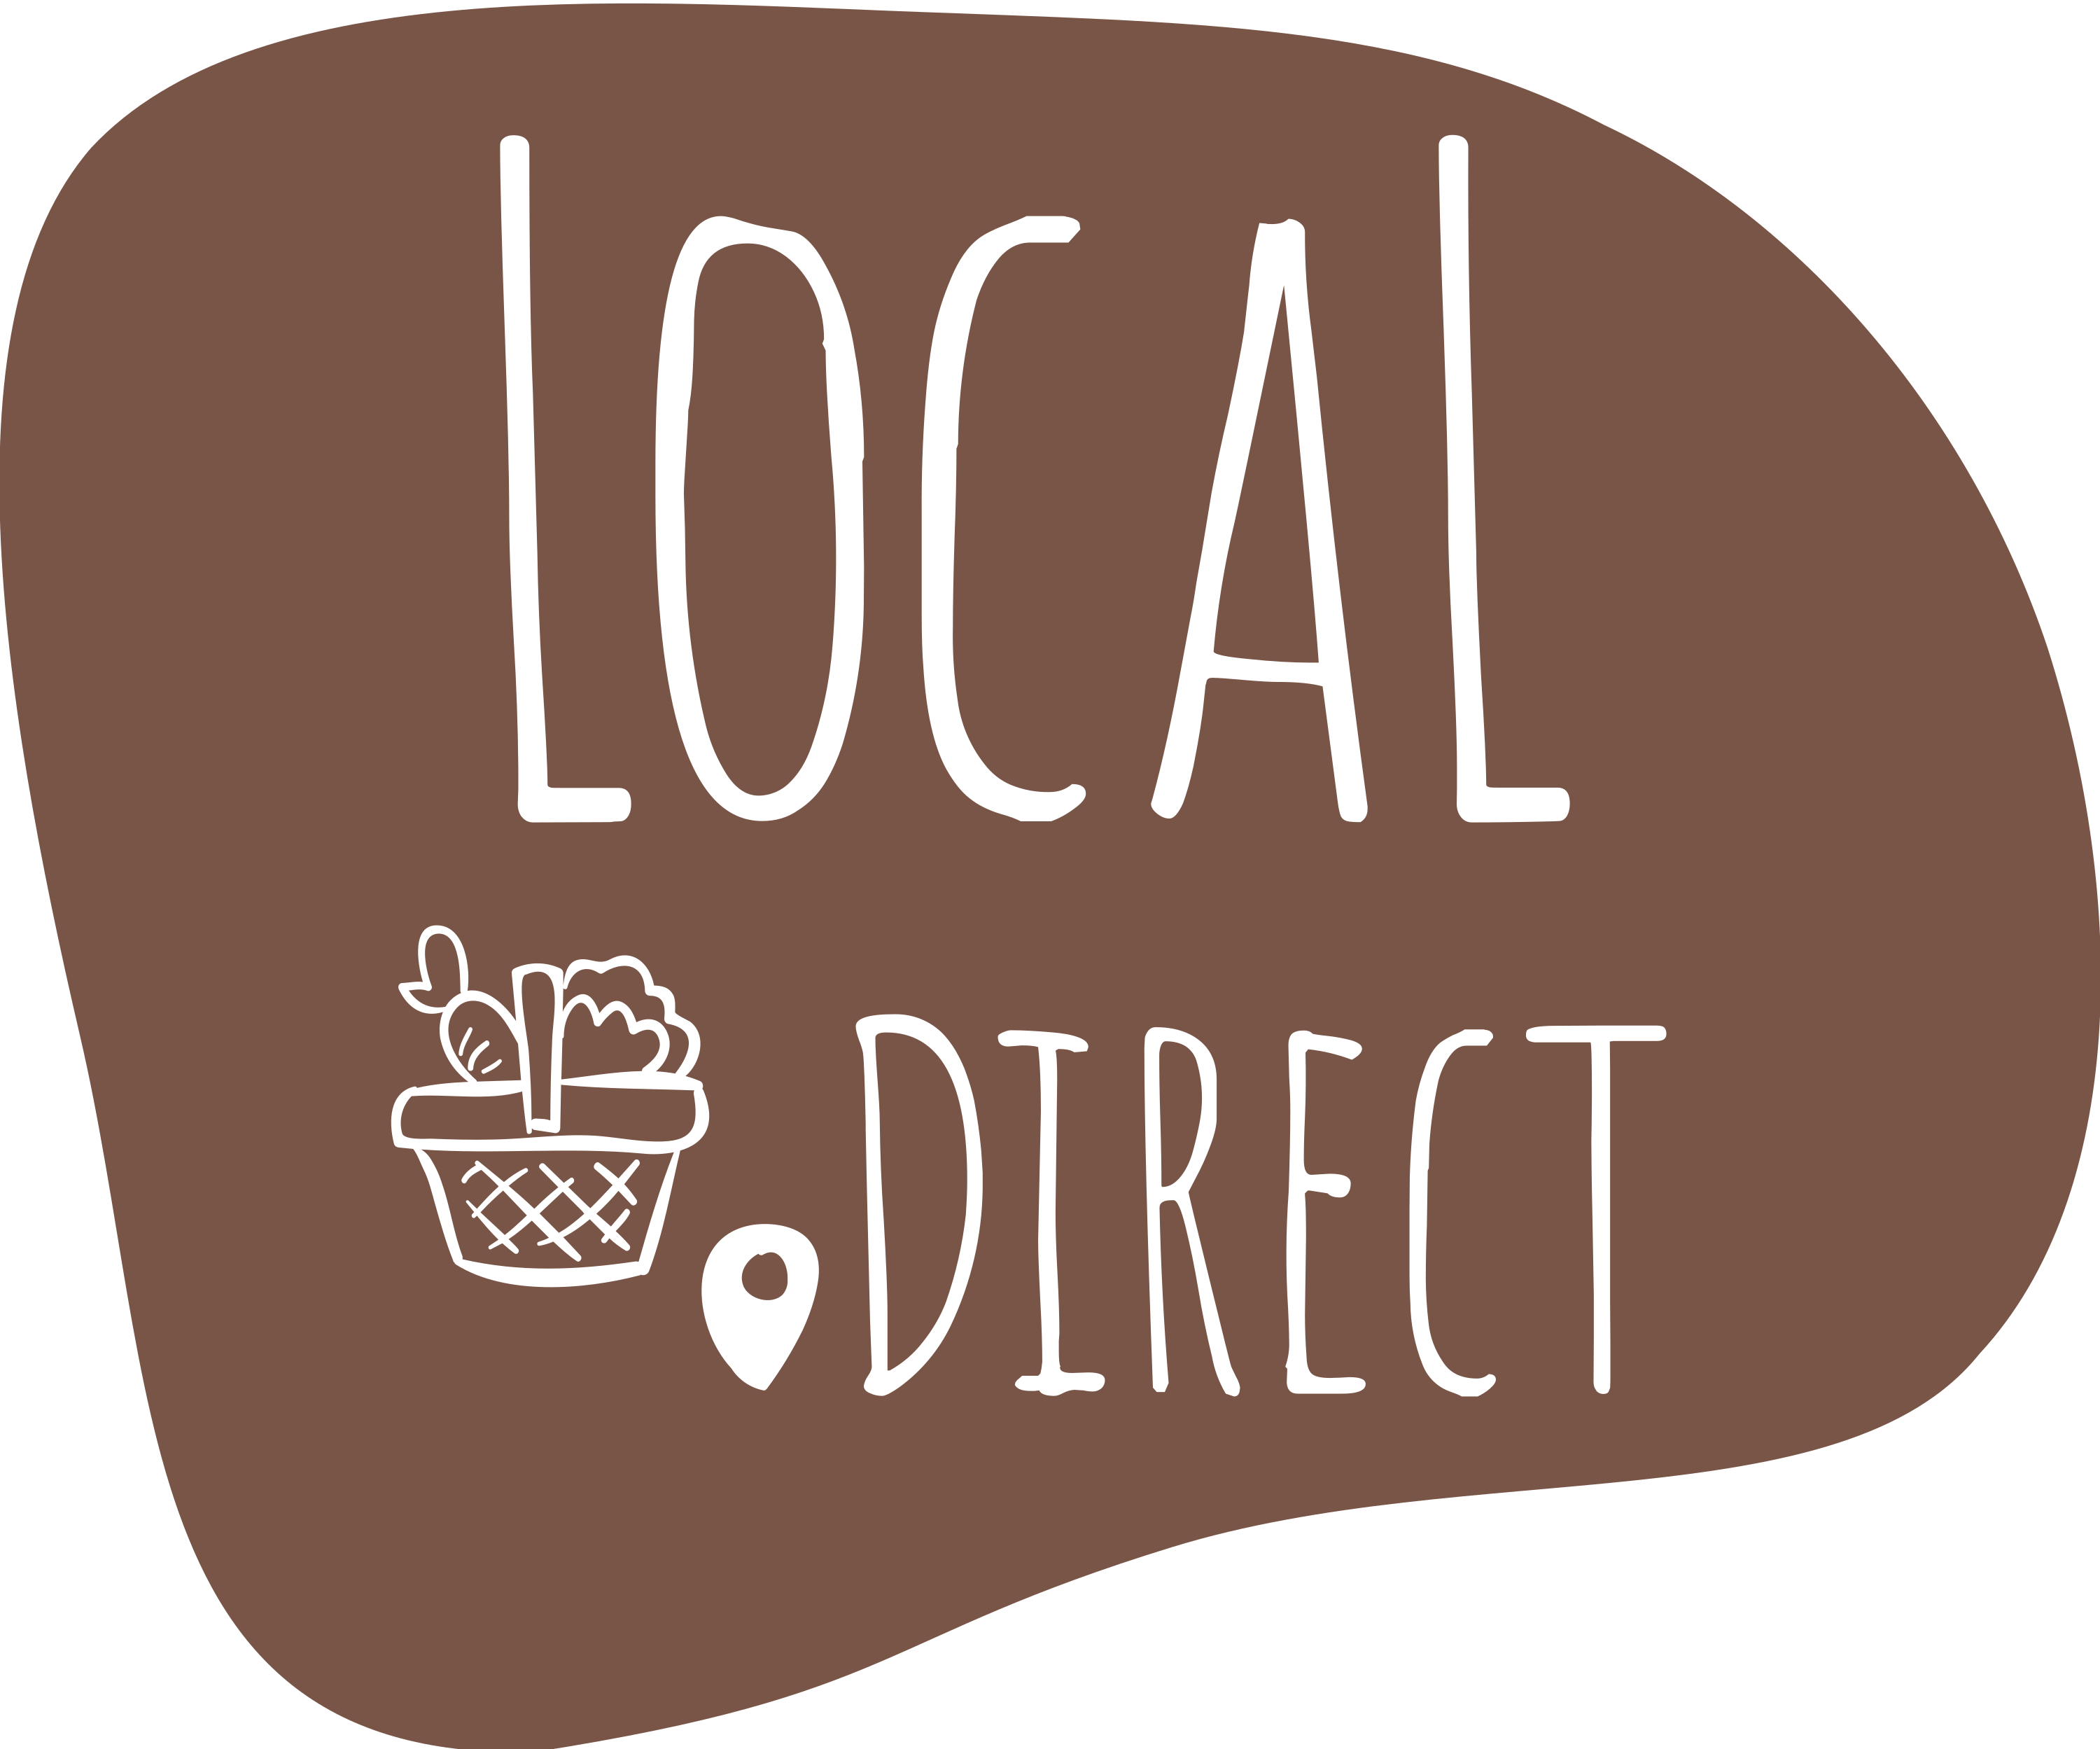 local.direct